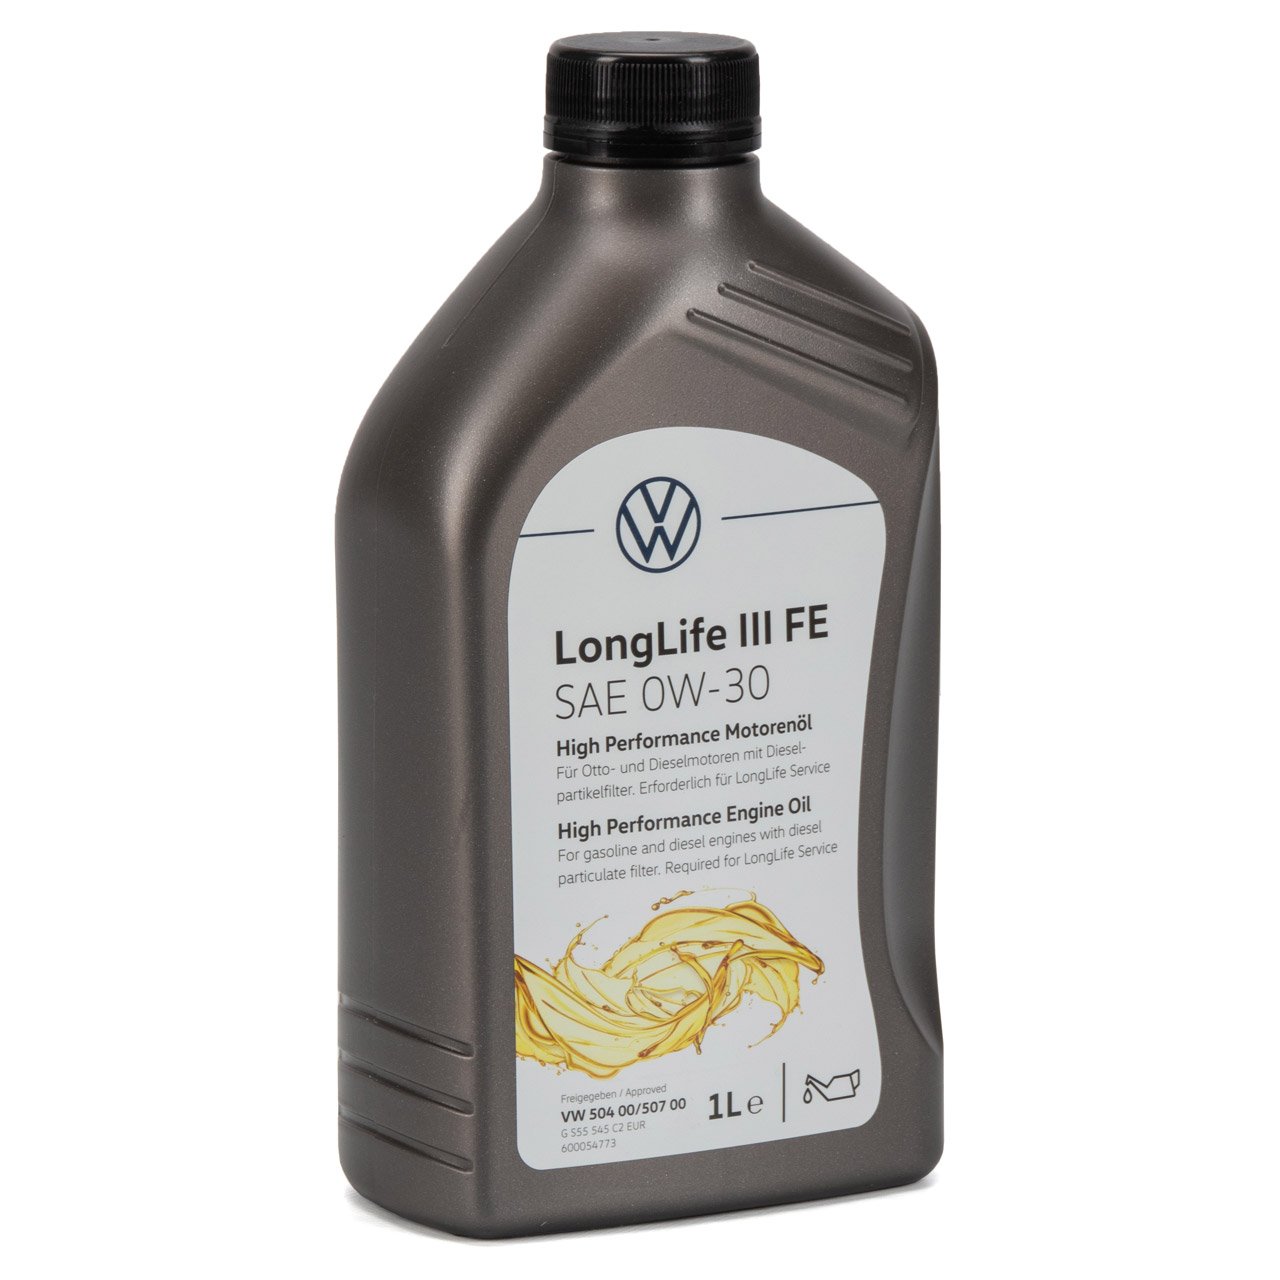 ORIGINAL VW Motoröl Öl 0W-30 LONGLIFE III FE 504.00 507.00 GS55545C2 - 1 Liter